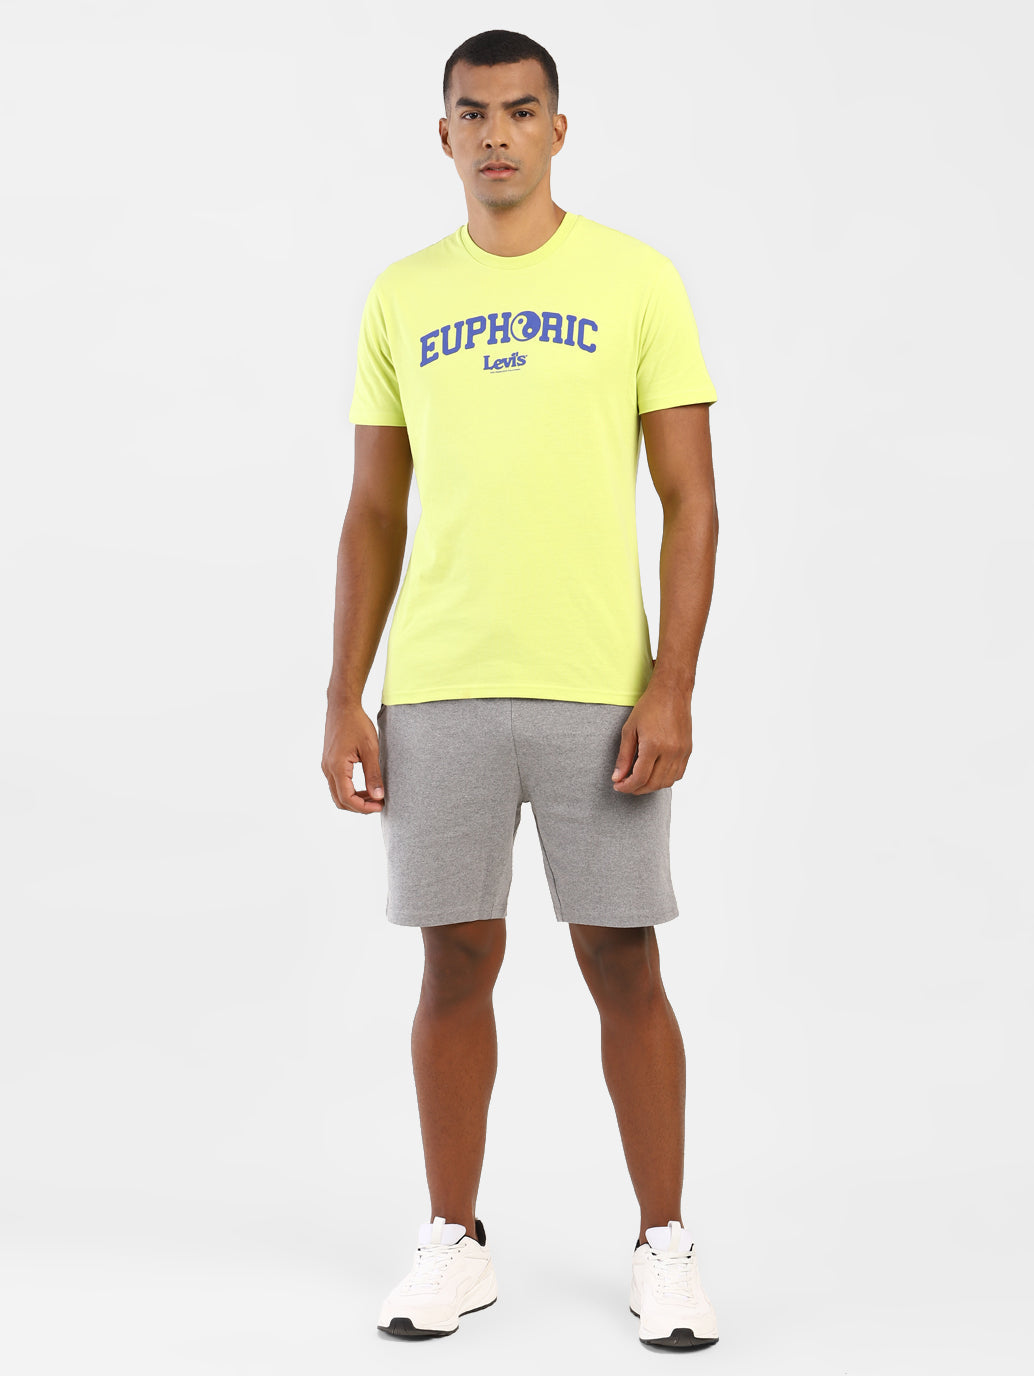 Men's Yellow Typography Printed Crew Neck T-Shirt